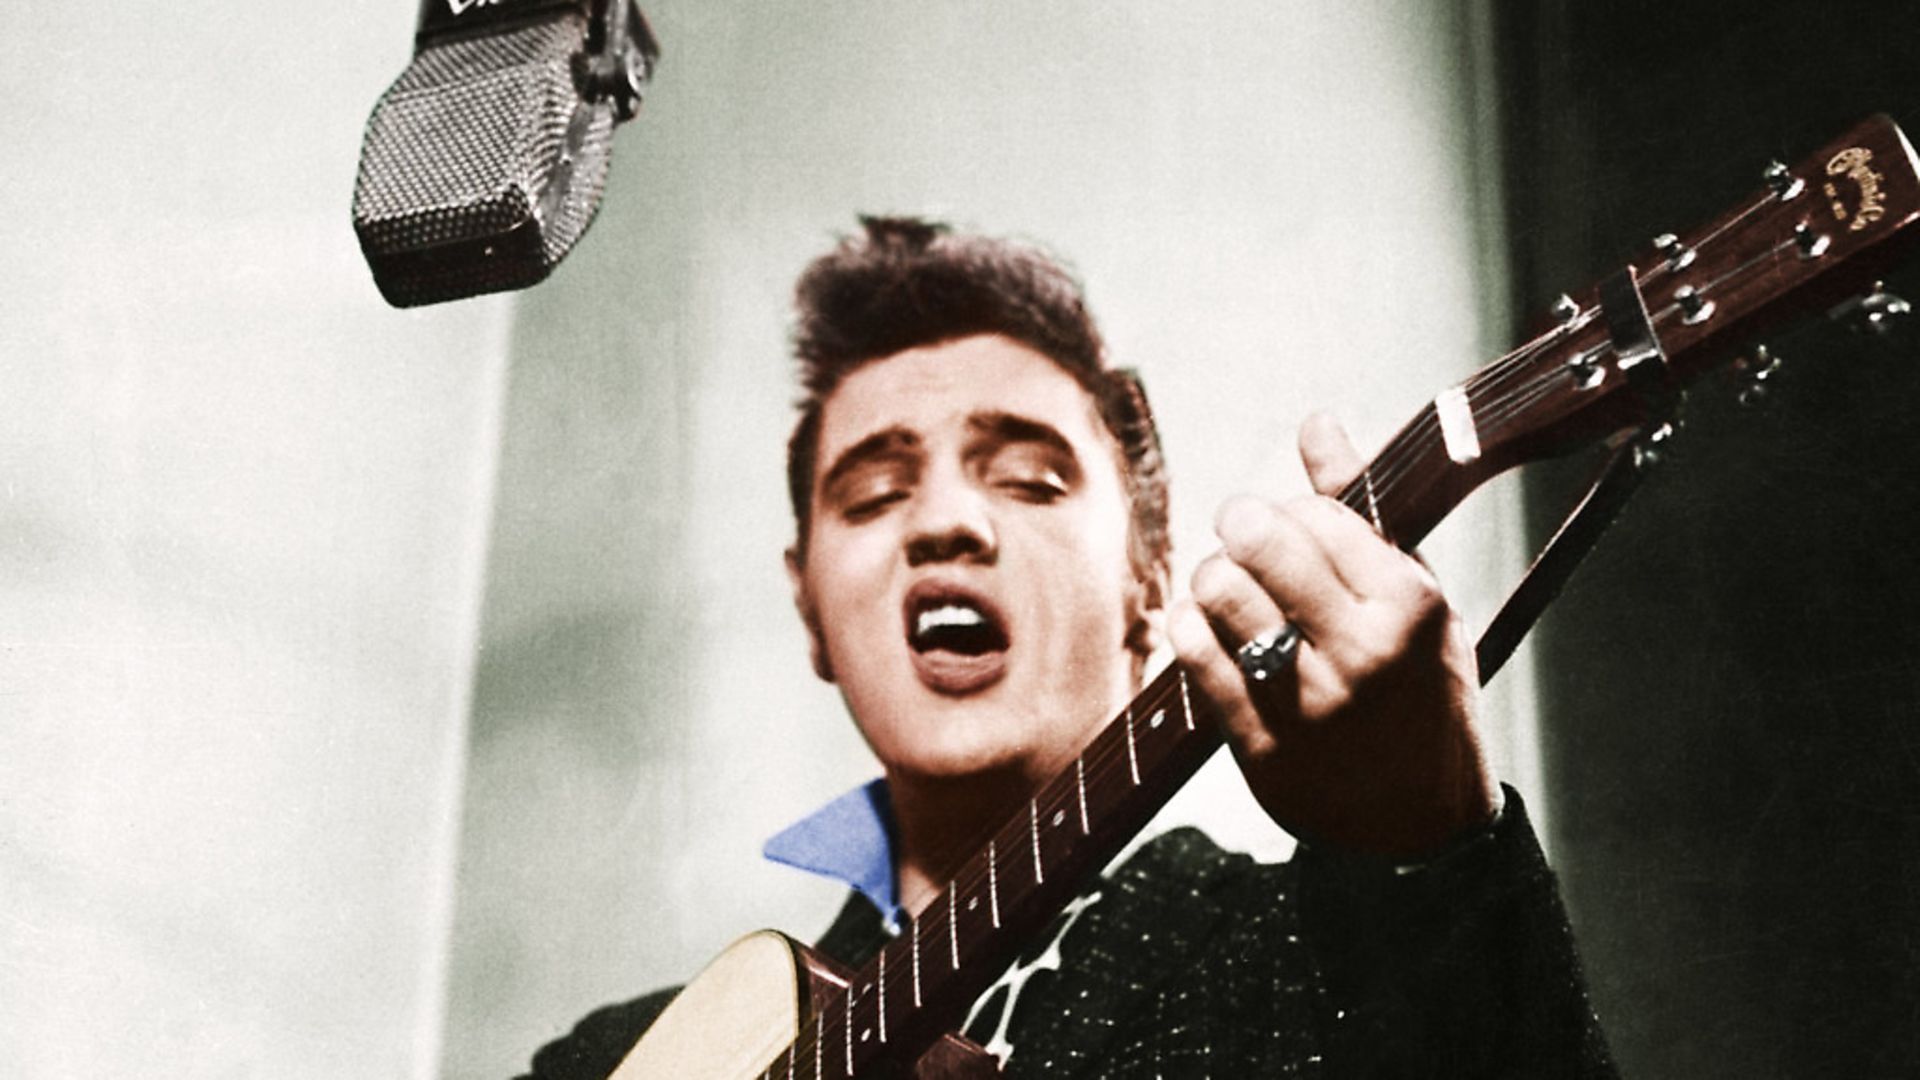 Elvis Presley playing guitar. Photo: Bettmann/Getty Images - Credit: Bettmann Archive